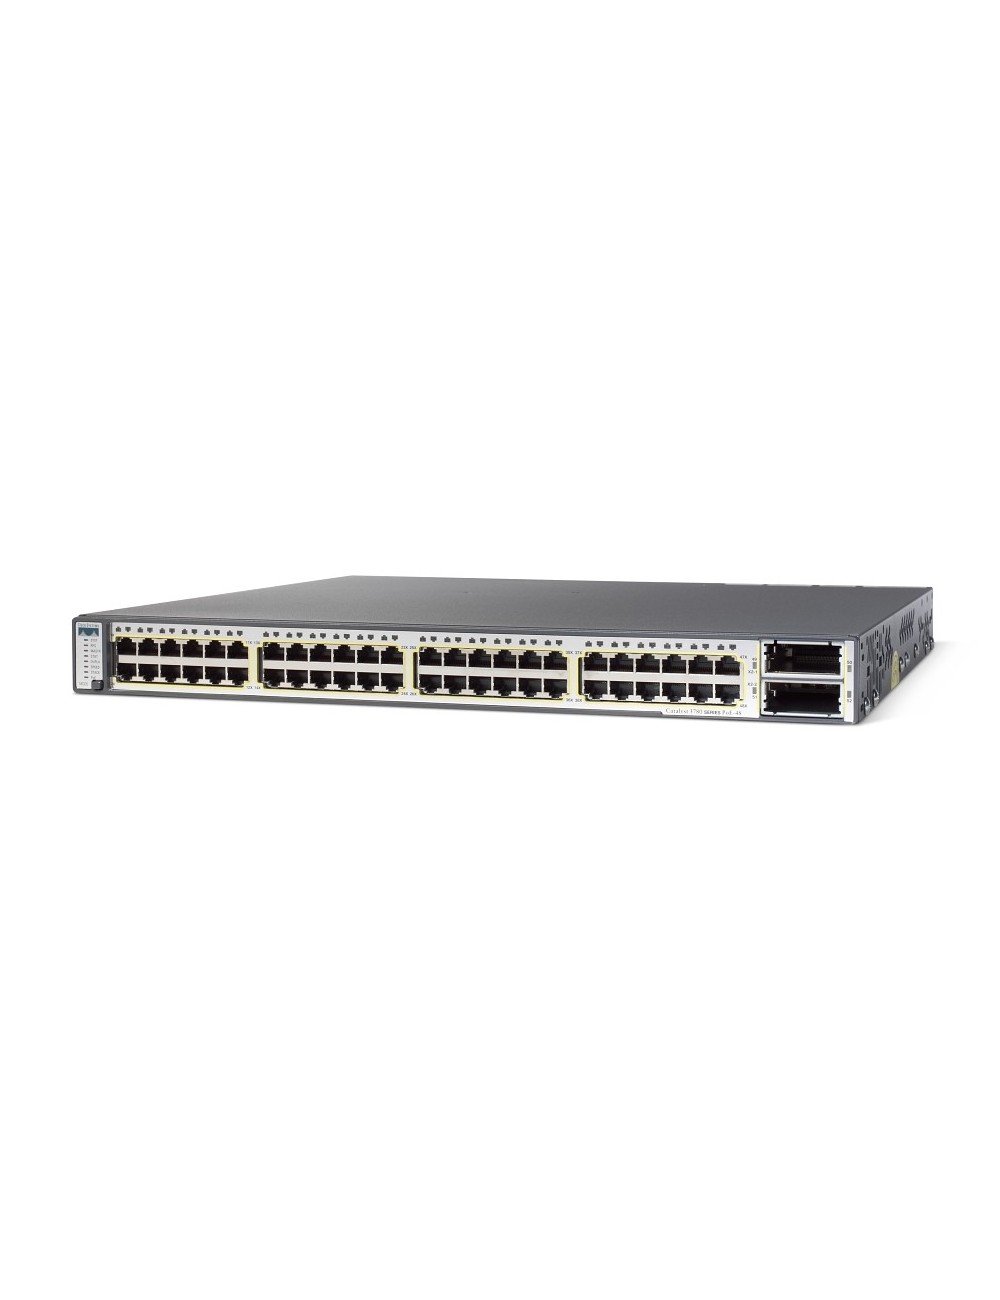 WS-C3750E-48TD-​E Cisco managed gigabit stackable switch